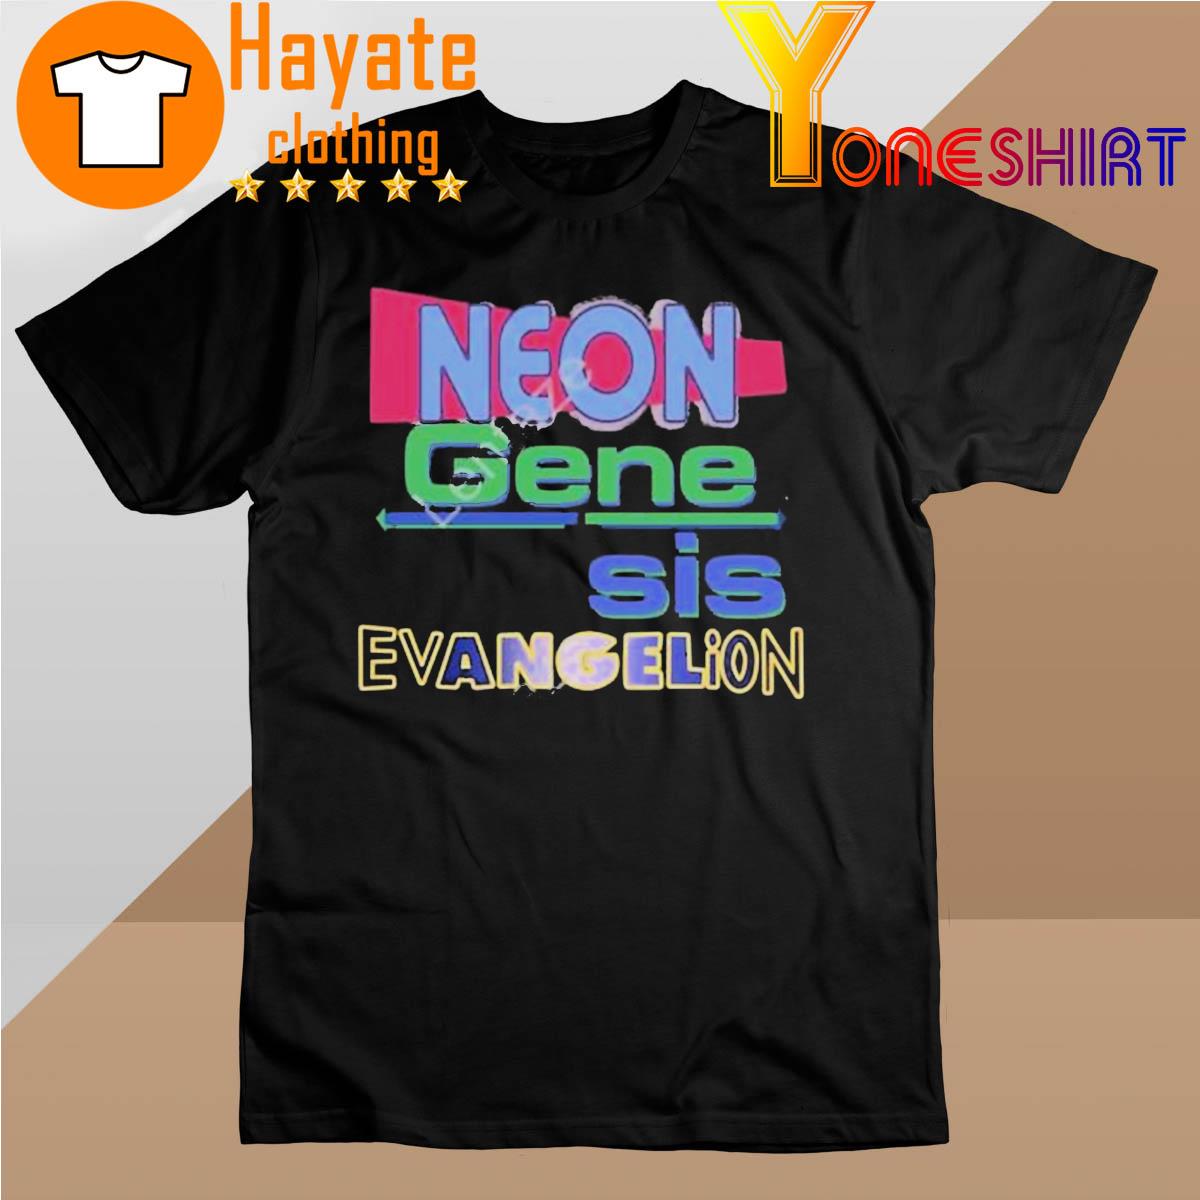 Neon Gene Sis Evangelion Sweatshirt Out Of Context shirt